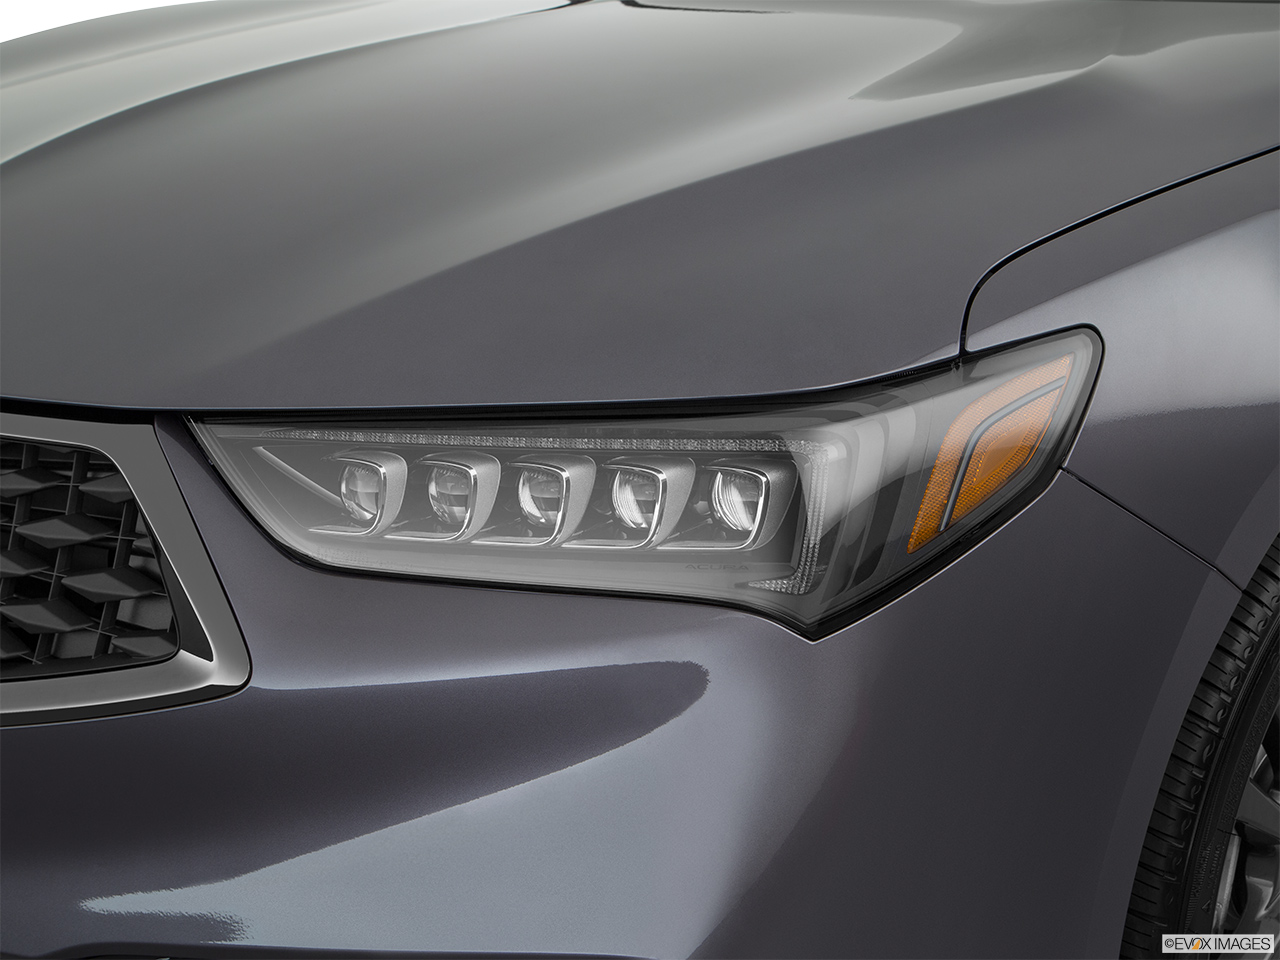 2019 Acura TLX 3.5L Drivers Side Headlight. 